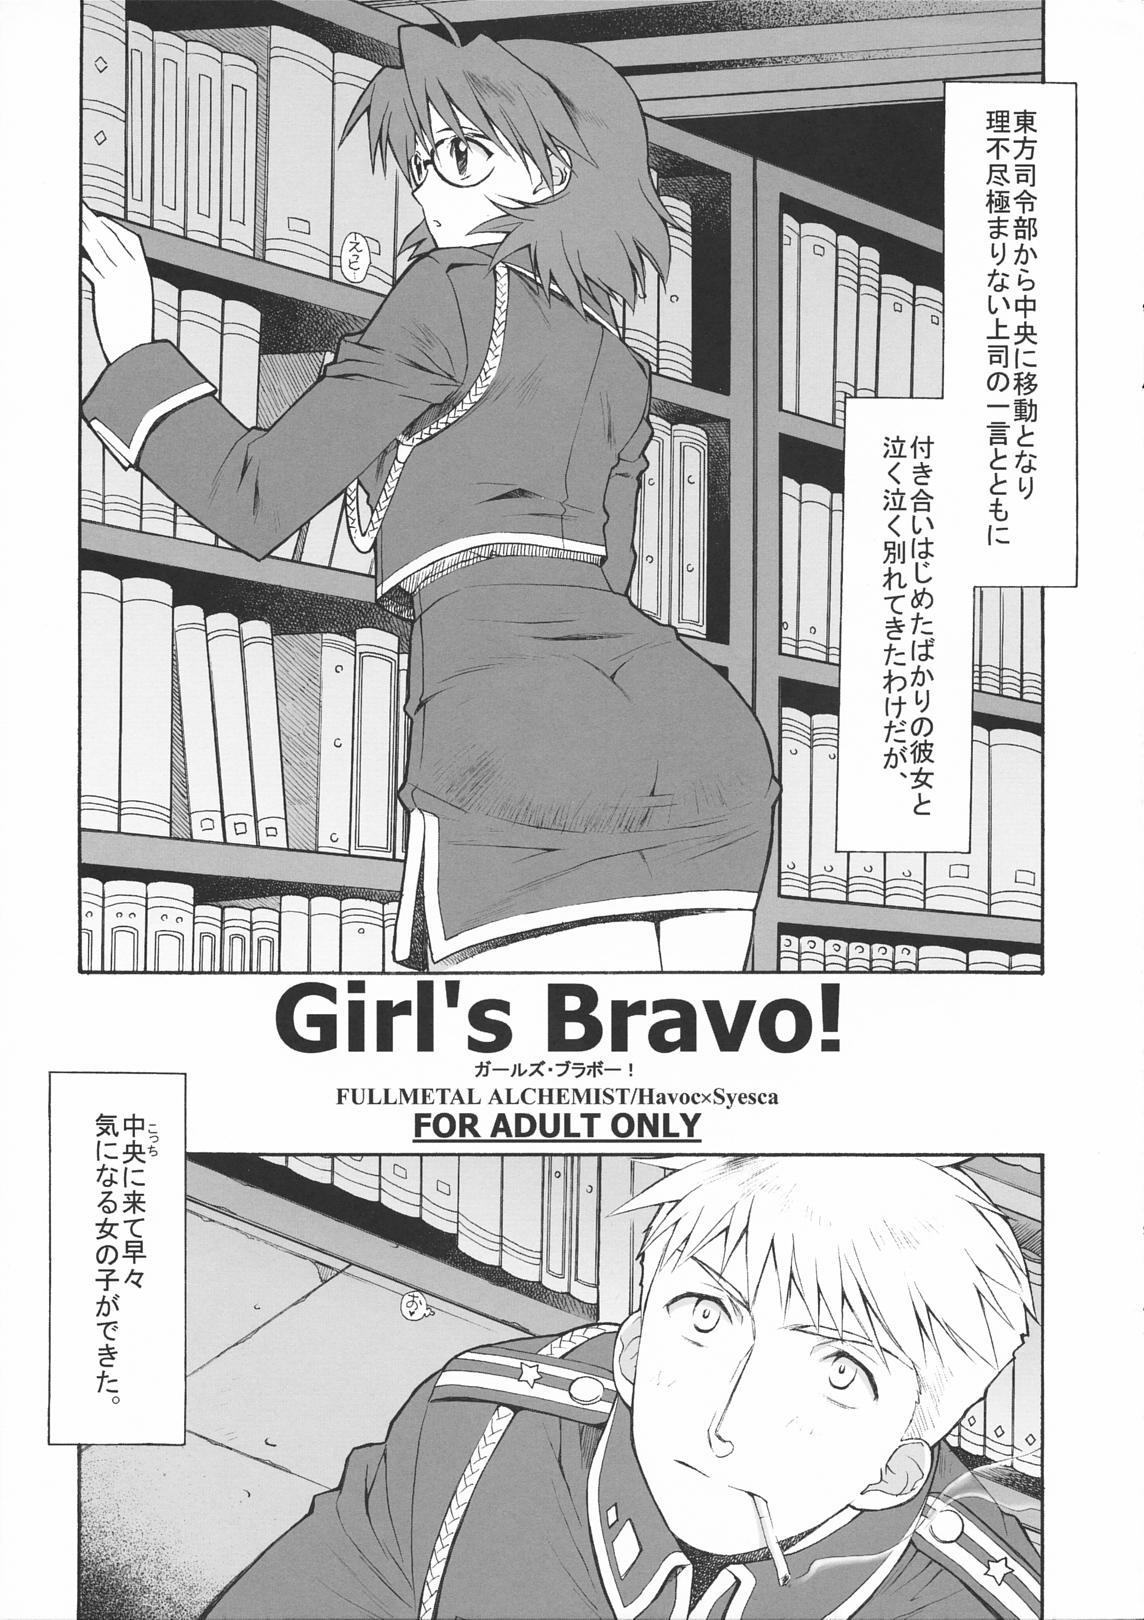 Girl's Bravo! 1